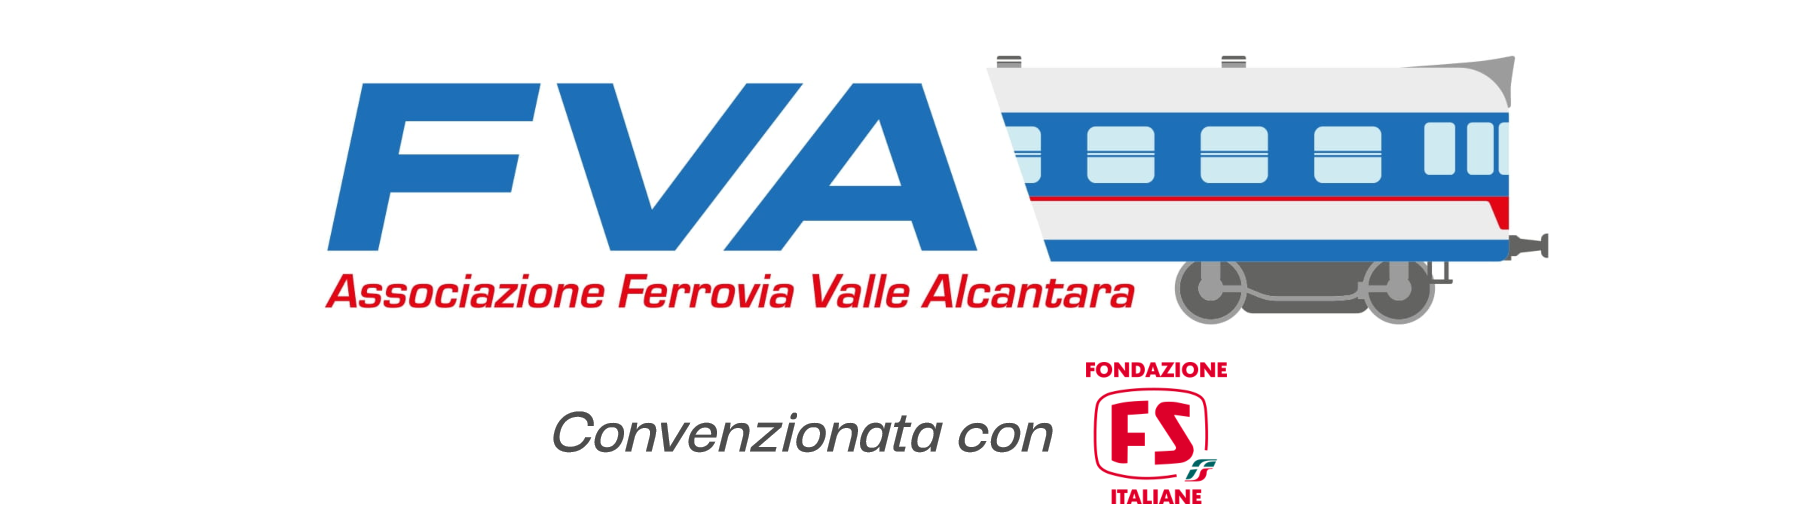 News-Associazione Ferrovia Valle Alcantara